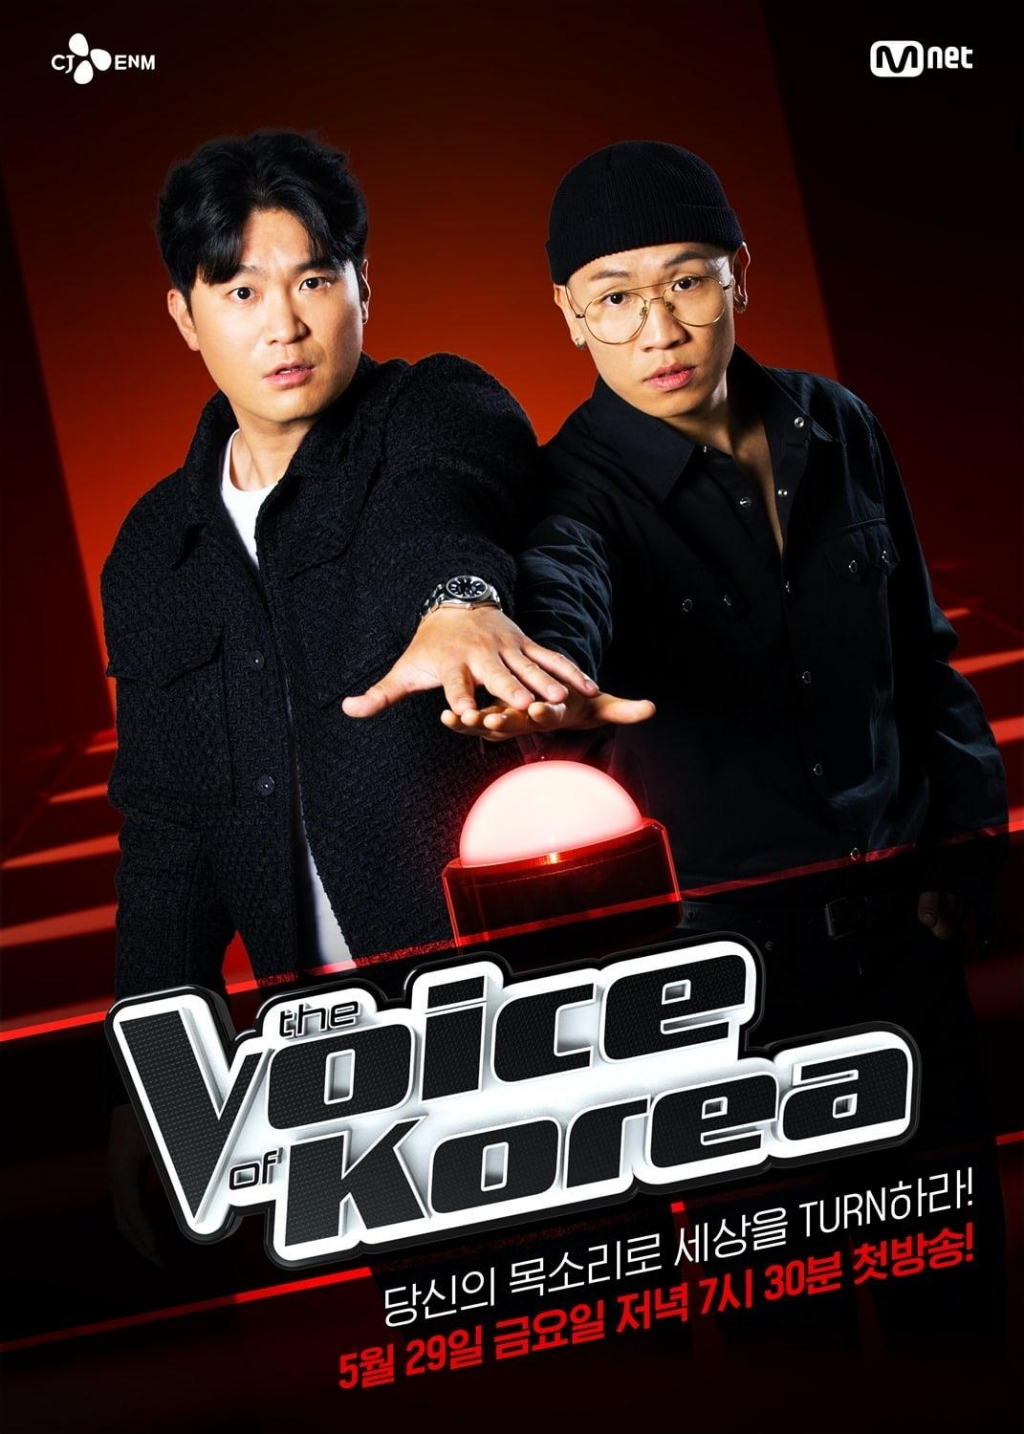 kim jong kook cung dan huan luyen vien sieu ngau trong poster cua the voice han quoc